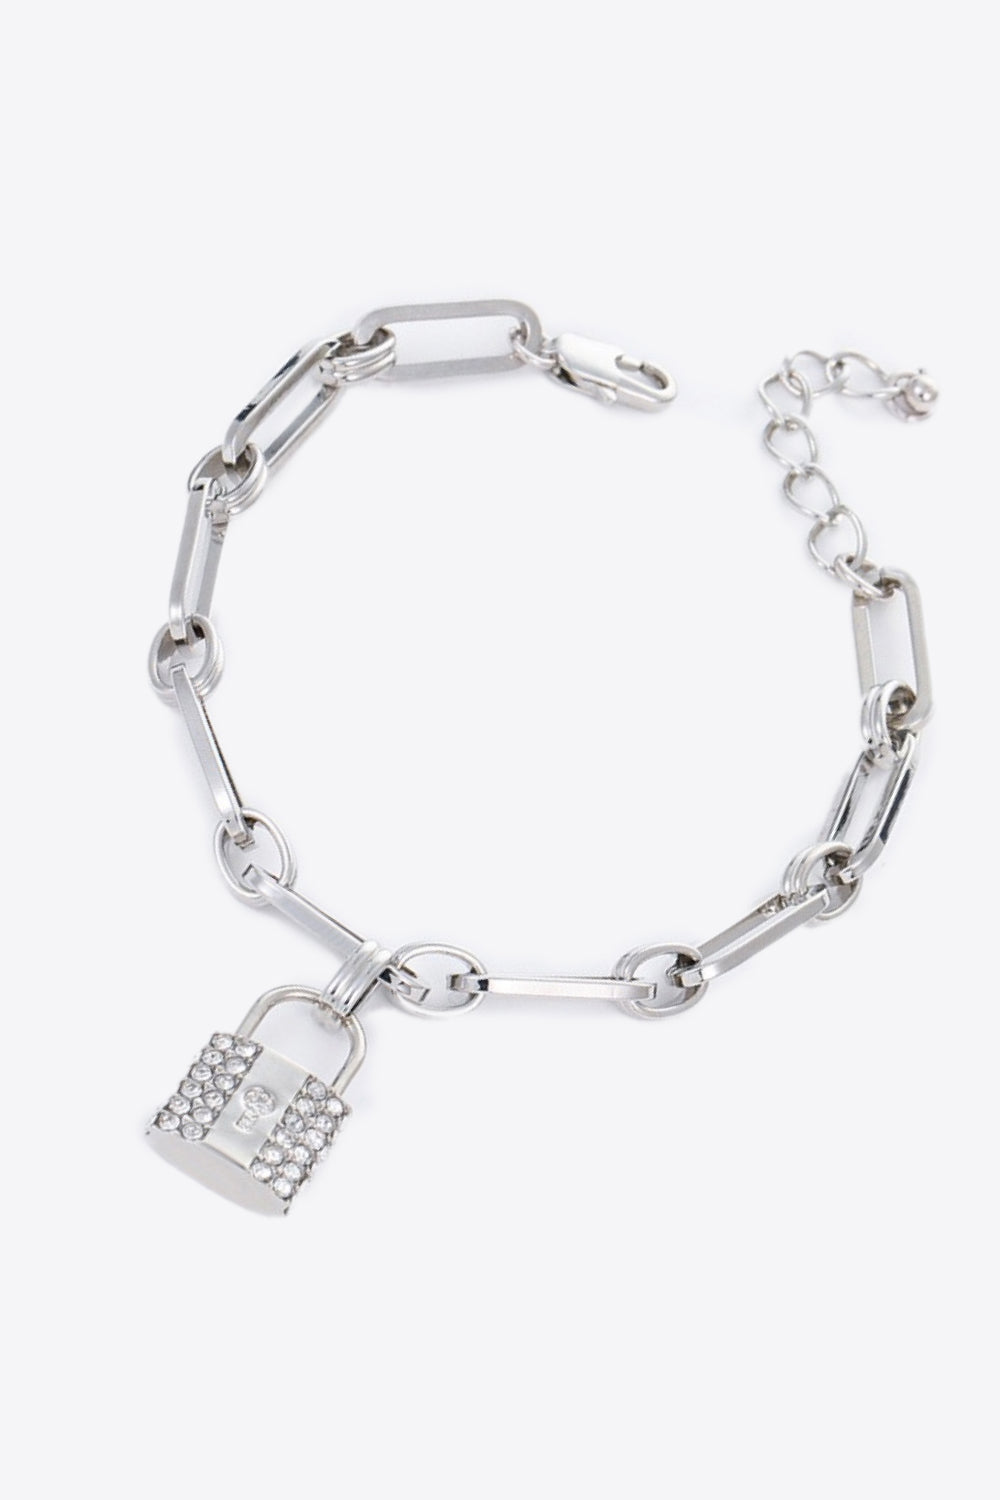 Lock Charm Chain Bracelet - Silver / One Size - Women’s Jewelry - Bracelets - 2 - 2024